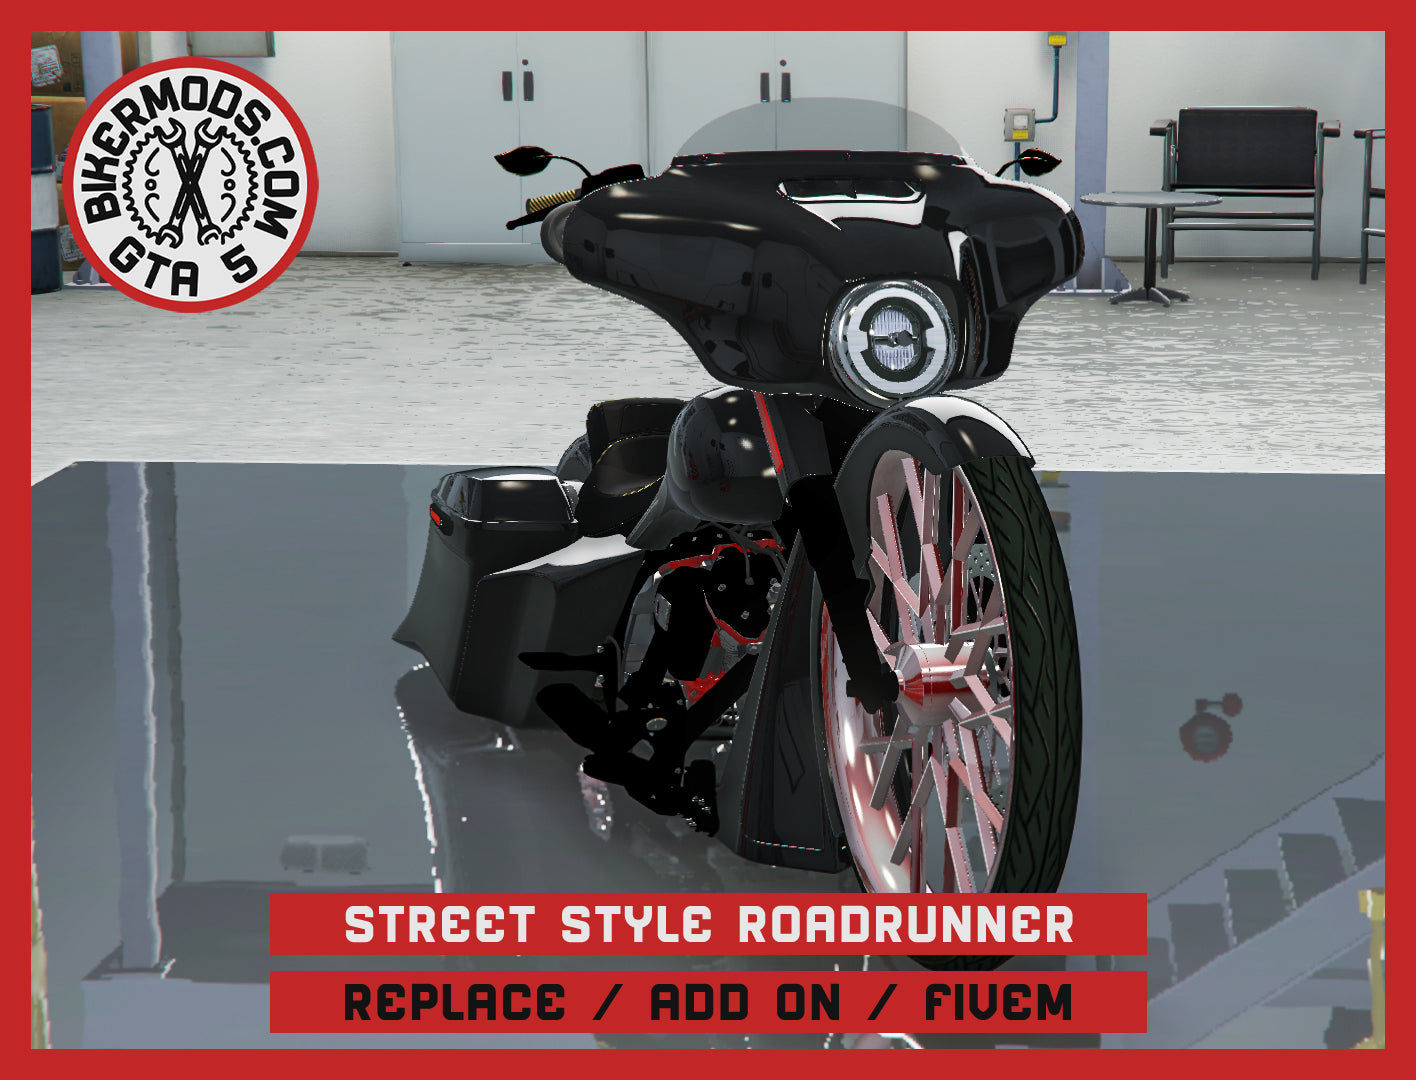 Street Style Roadrunner (Replace / Add On / FiveM) 226k Poly